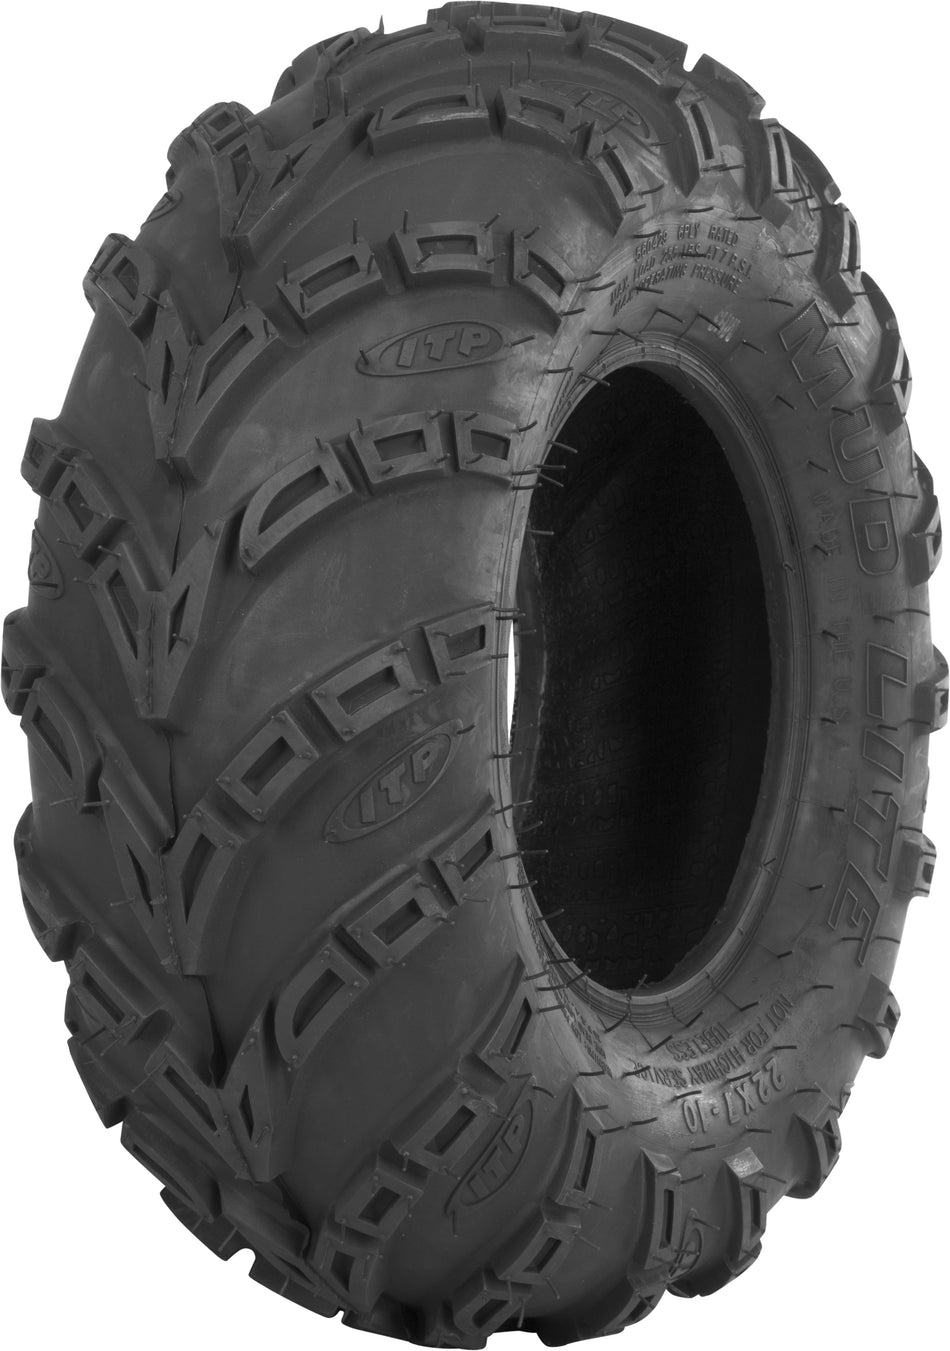 ITP Tire Mud Lite At Front 24x8-12 Lr- 310lbs Bias 560430